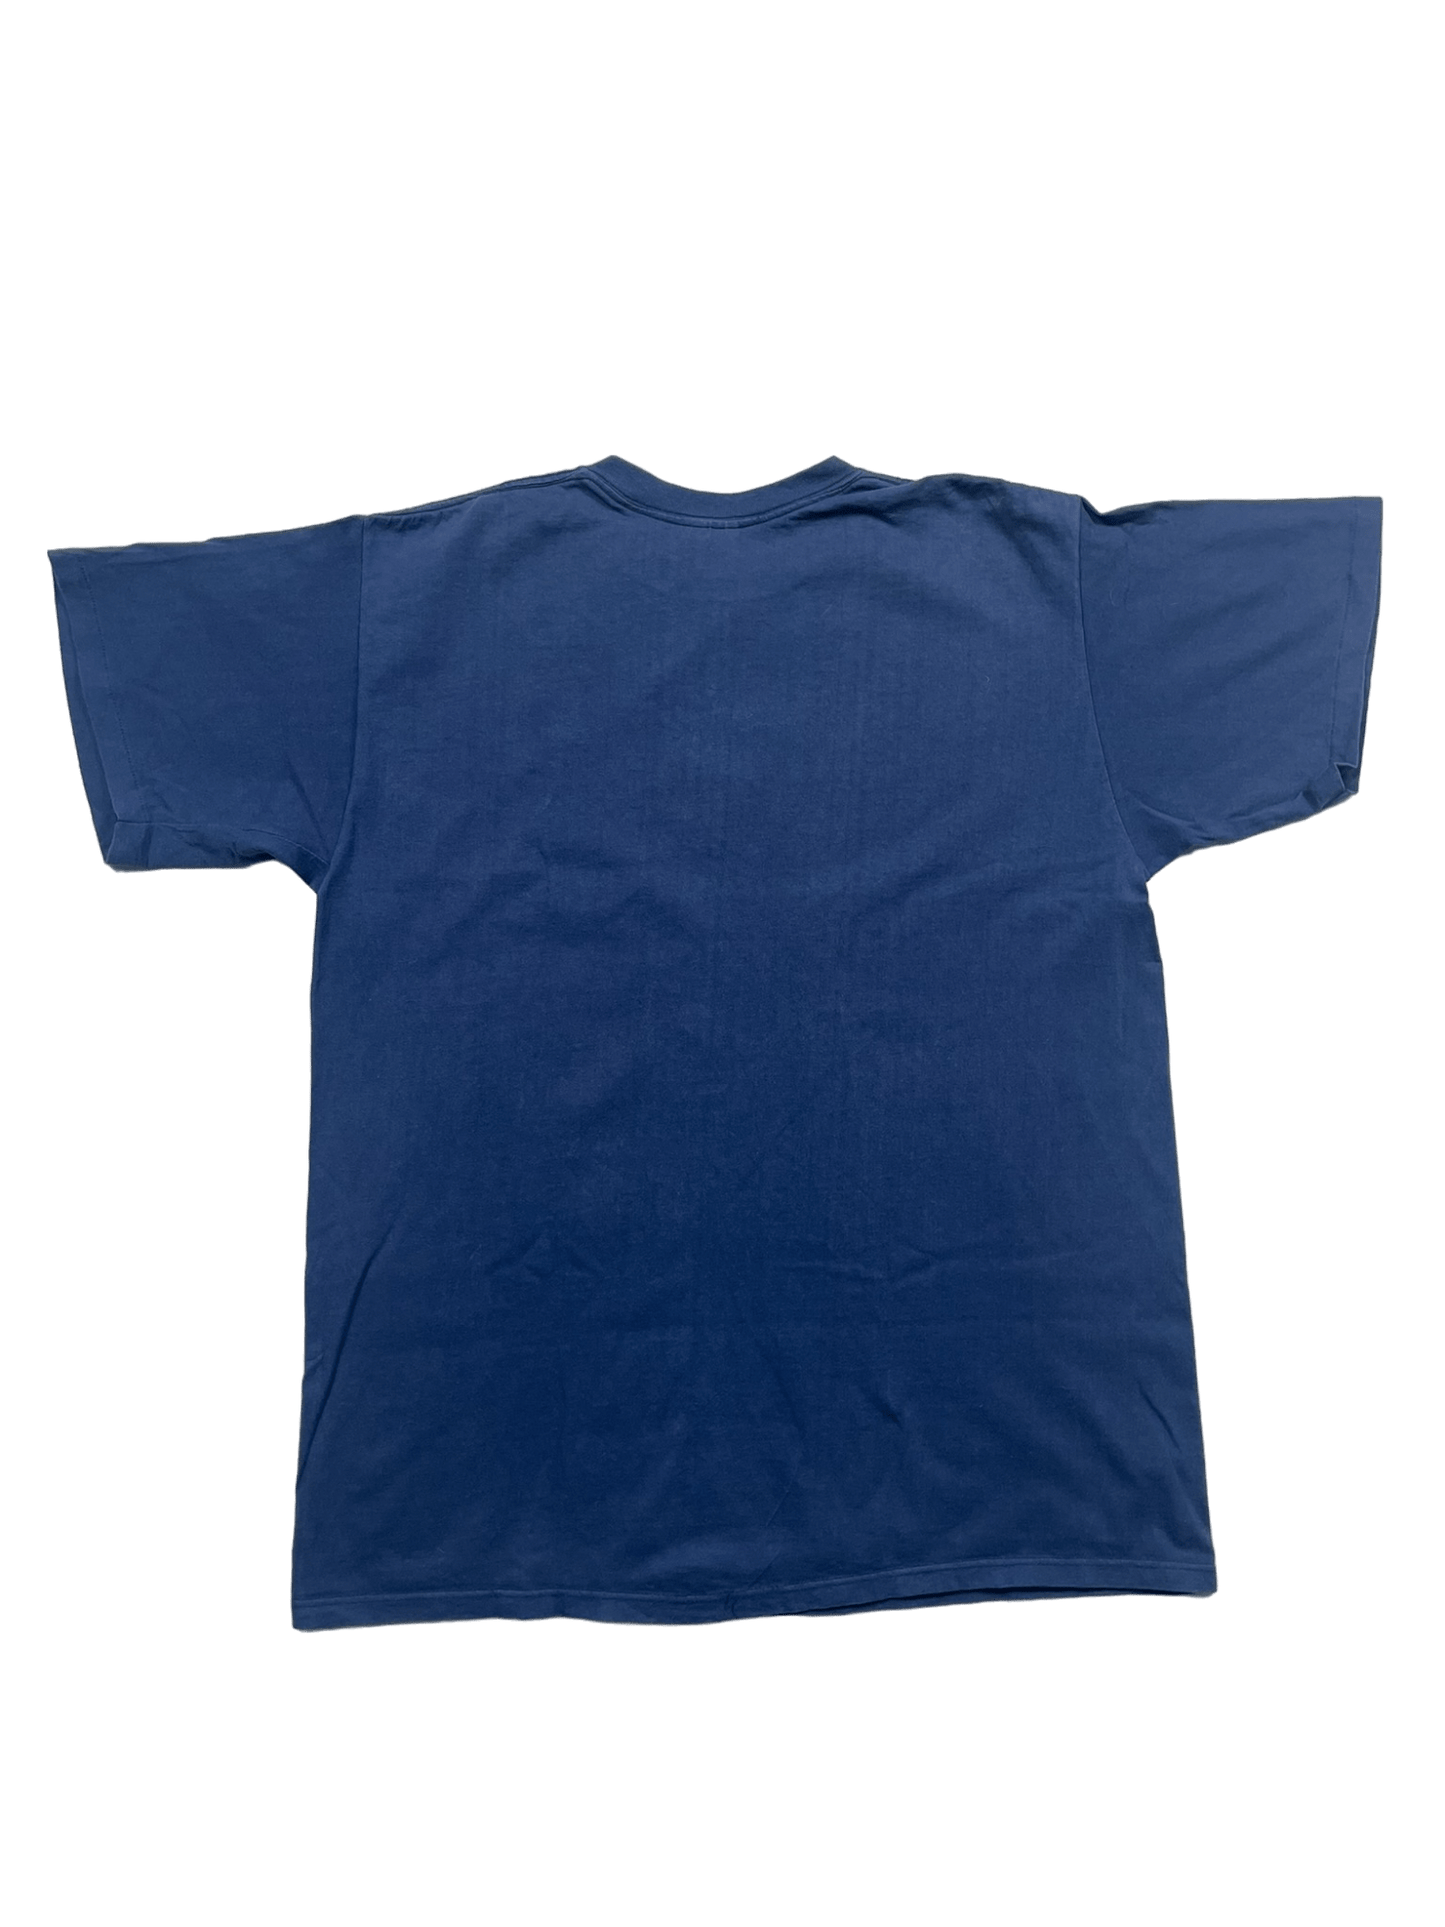 The Vintage Racks T-Shirt Georgetown Hoyas - L